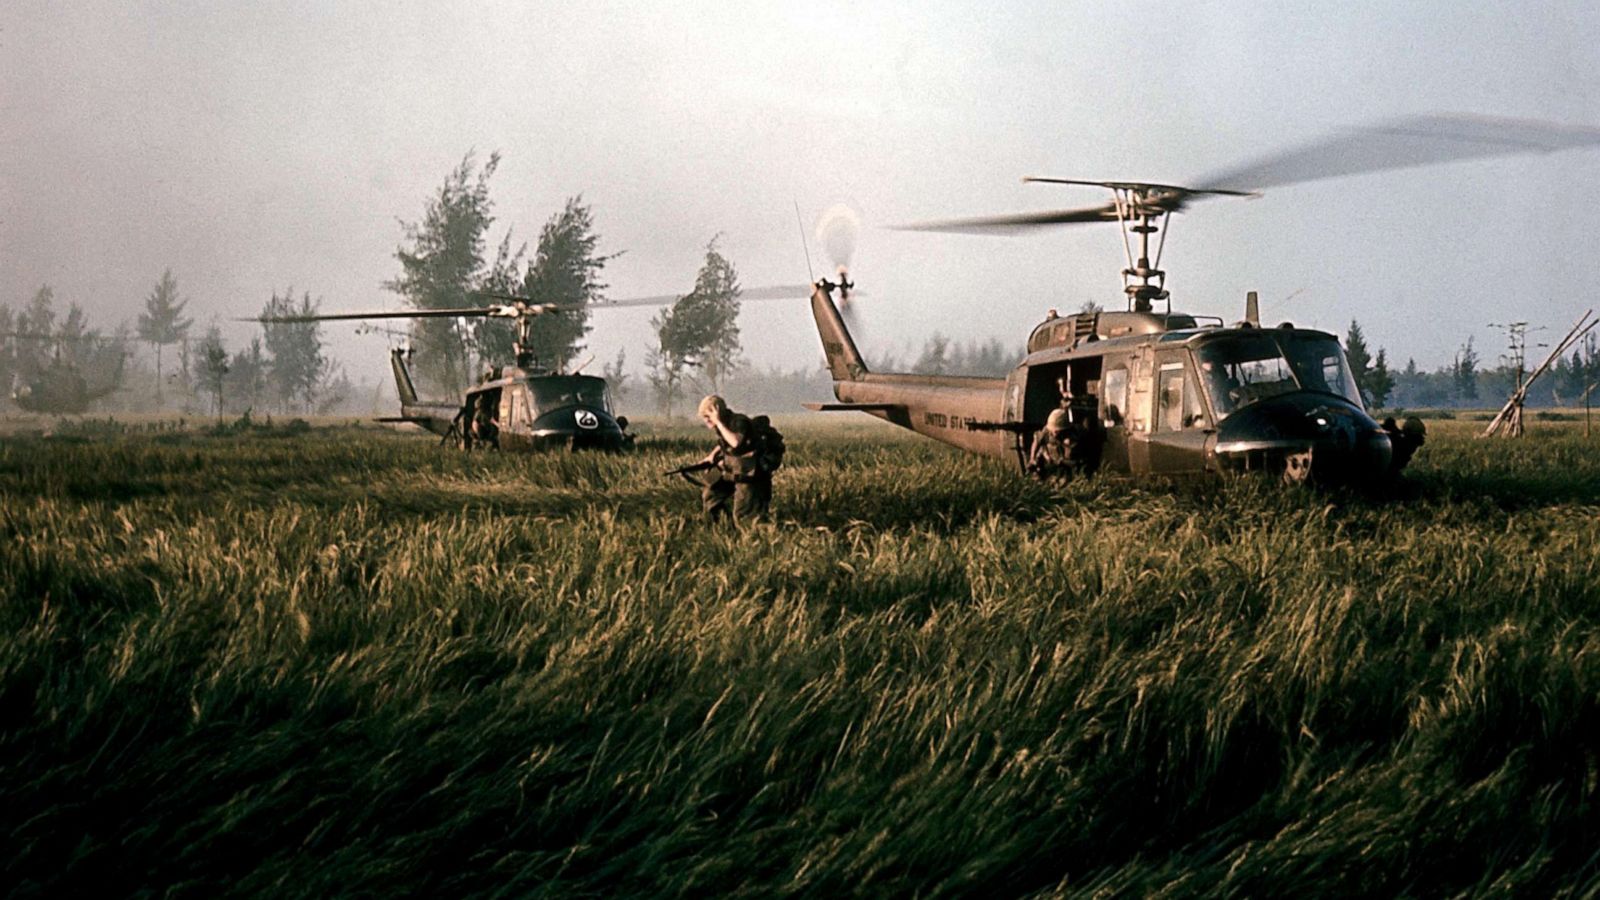 Vietnam War photographer on taking My Lai massacre photo: 'It was just unreal'